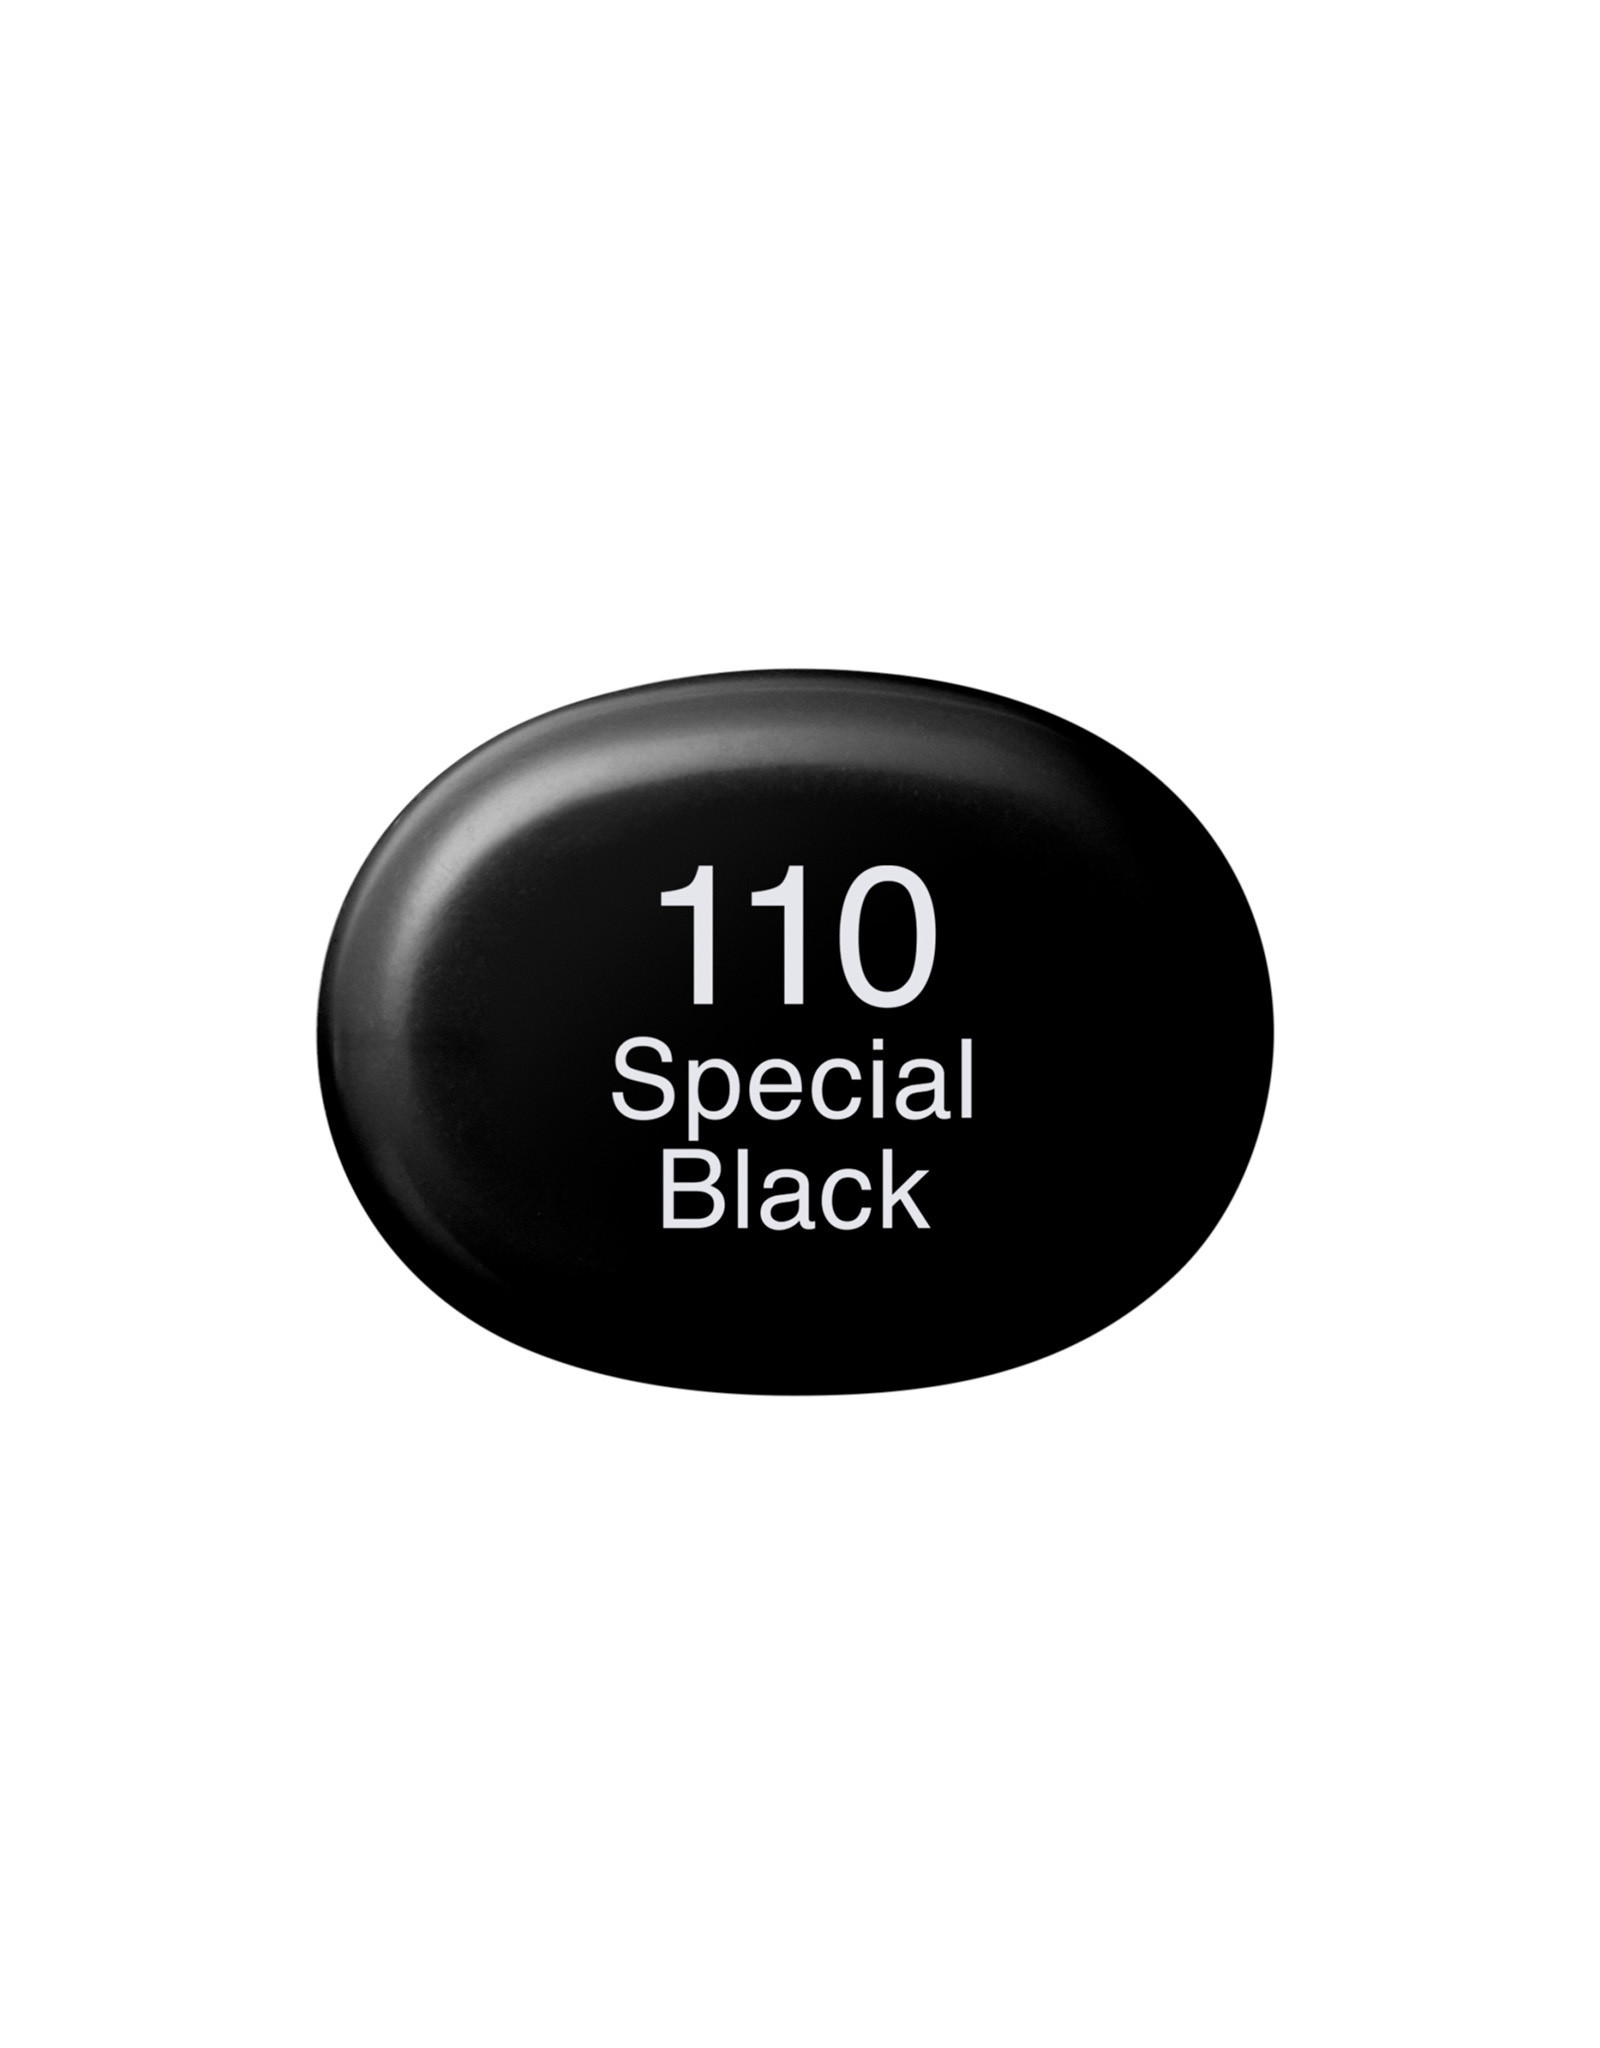 COPIC COPIC Sketch Marker 110 Special Black